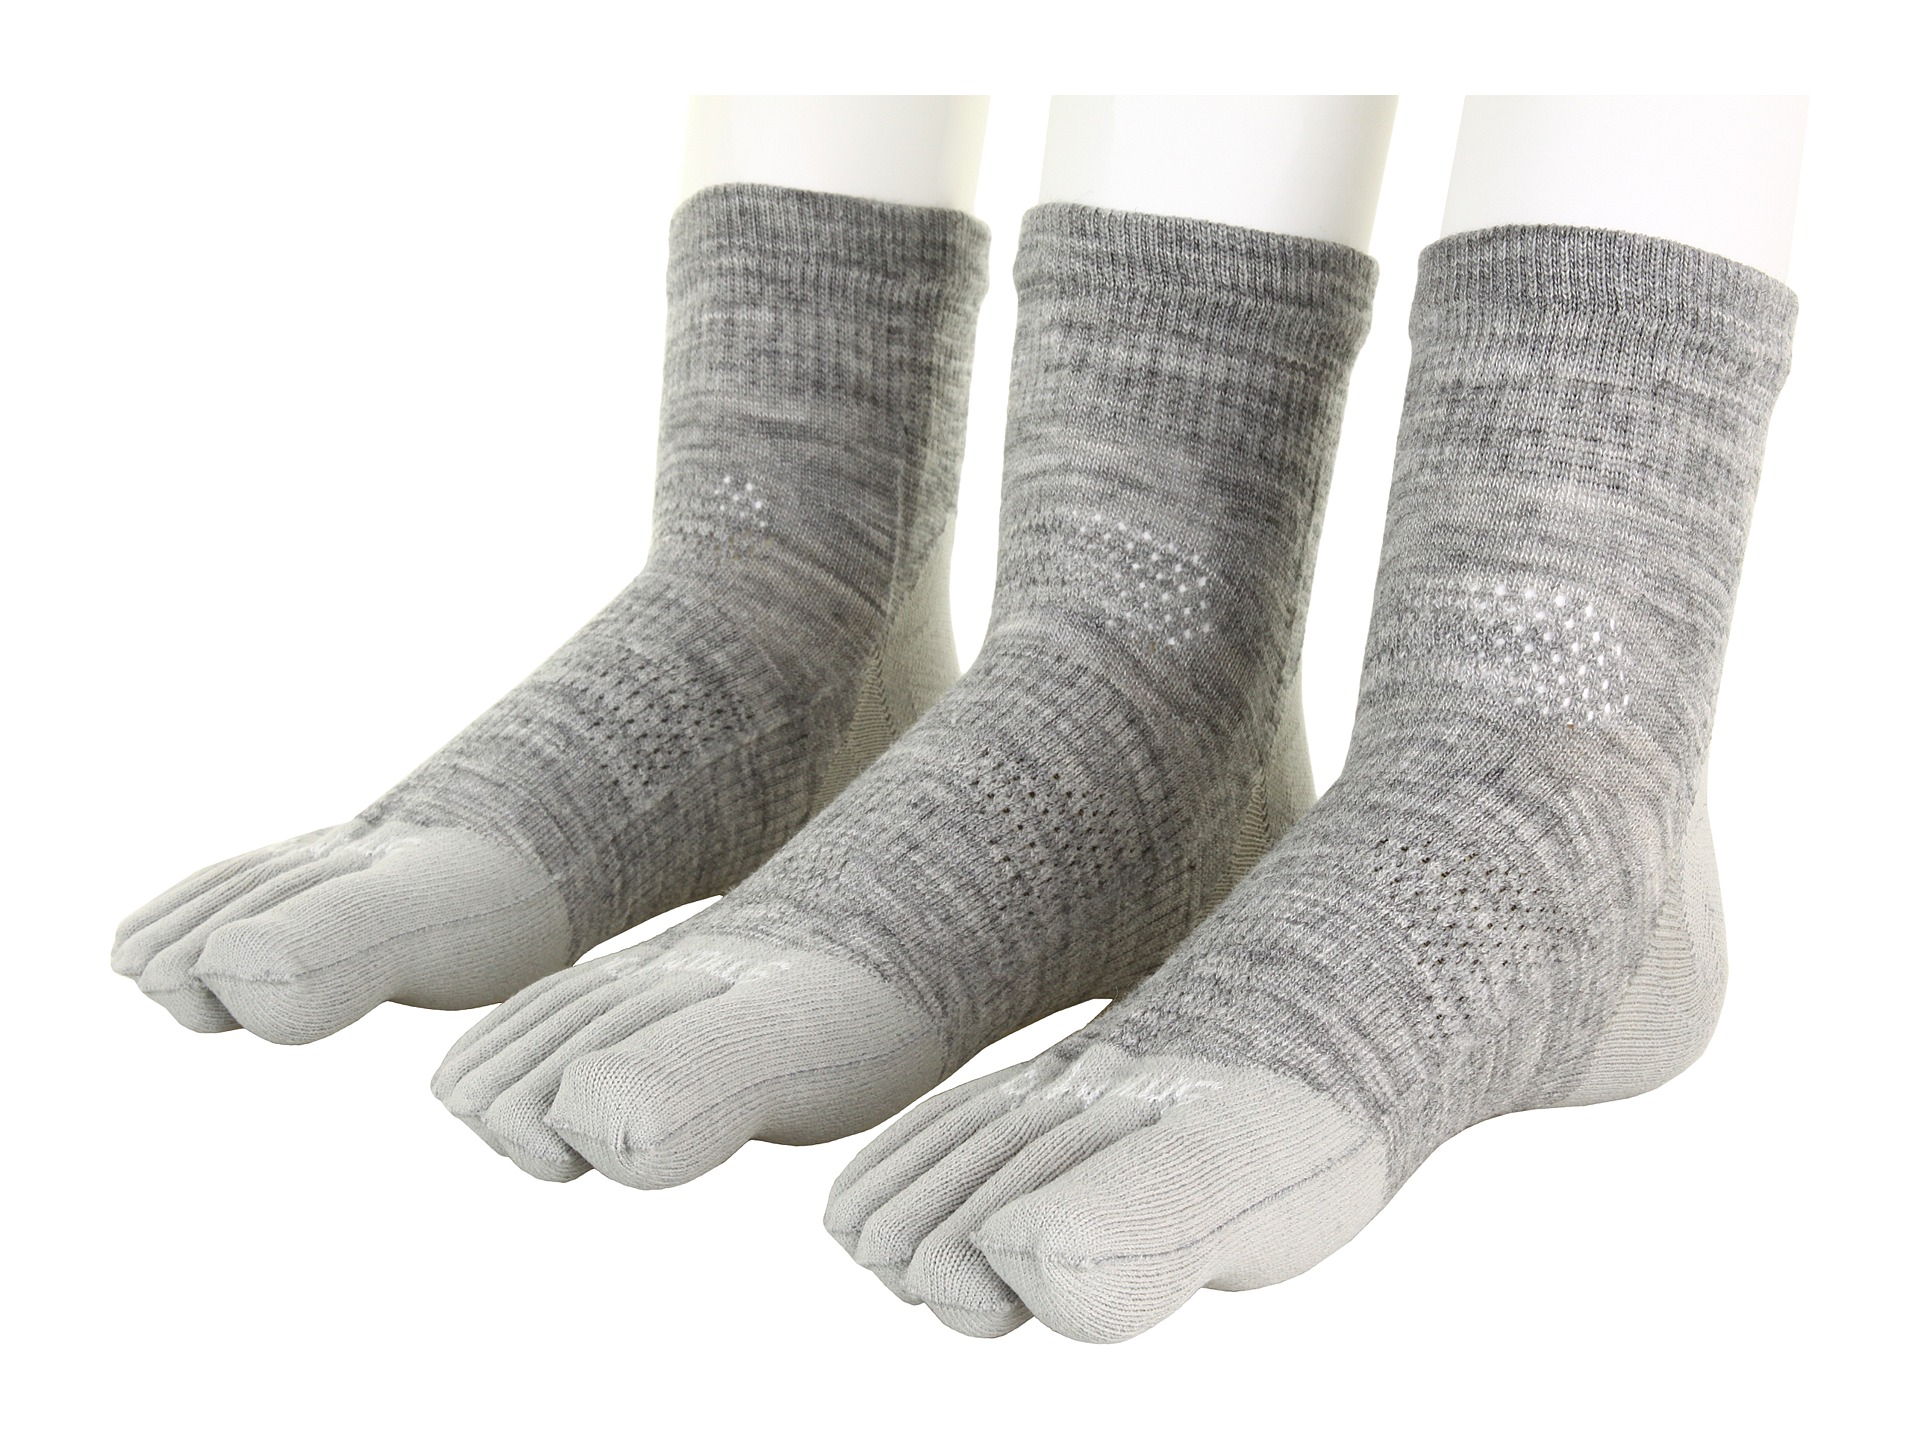 Injinji Original Weight Compression Toe Sock (1 Pair) $38.00 Rated 5 